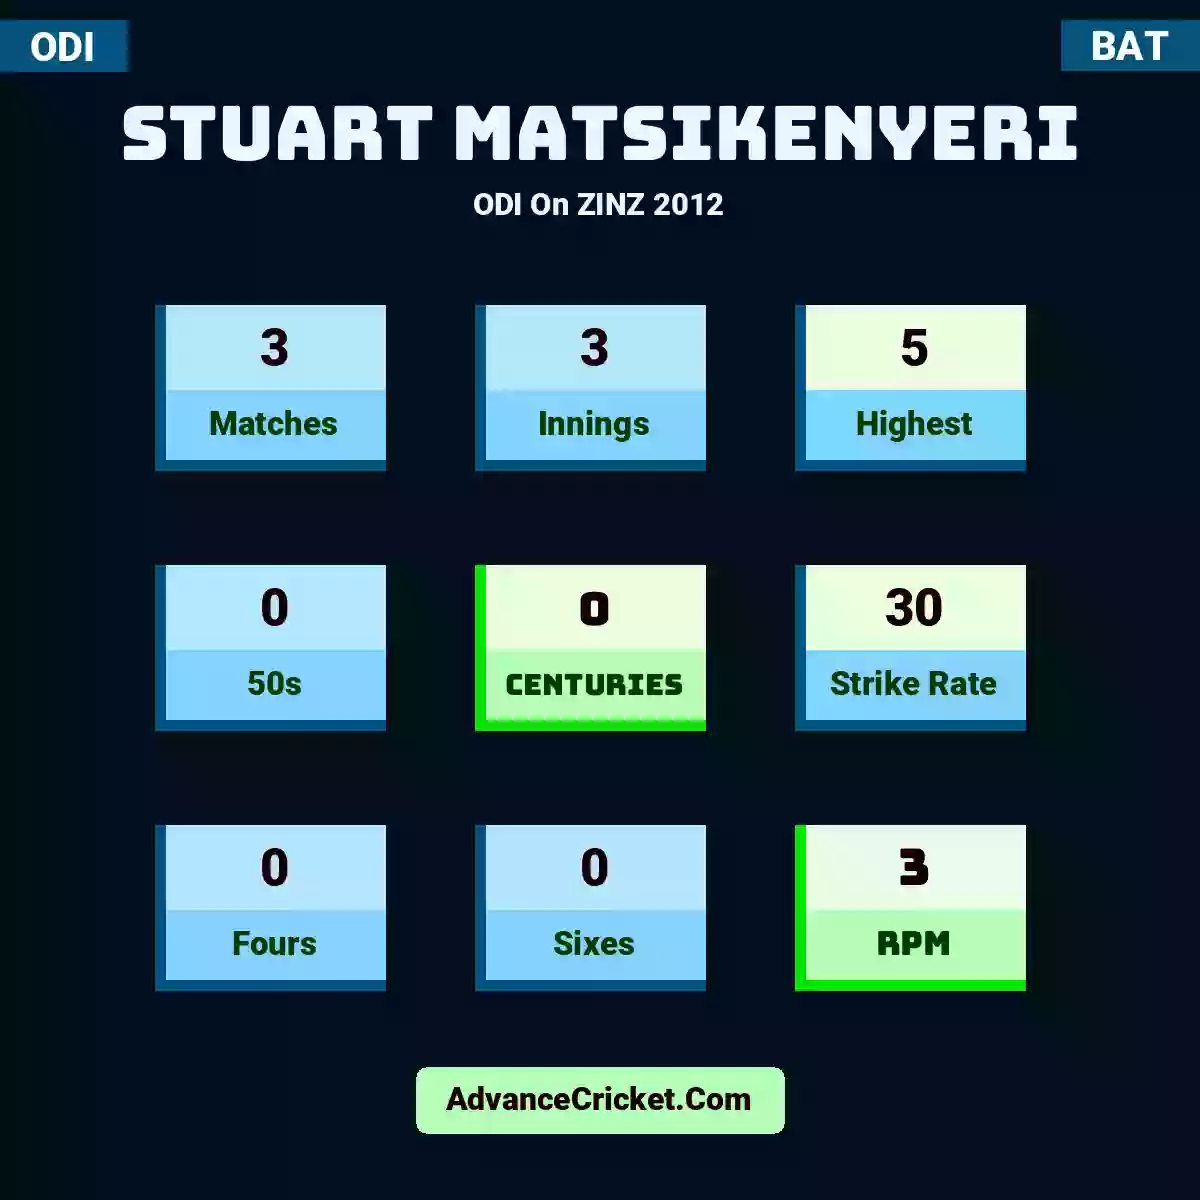 Stuart Matsikenyeri ODI  On ZINZ 2012, Stuart Matsikenyeri played 3 matches, scored 5 runs as highest, 0 half-centuries, and 0 centuries, with a strike rate of 30. S.Matsikenyeri hit 0 fours and 0 sixes, with an RPM of 3.